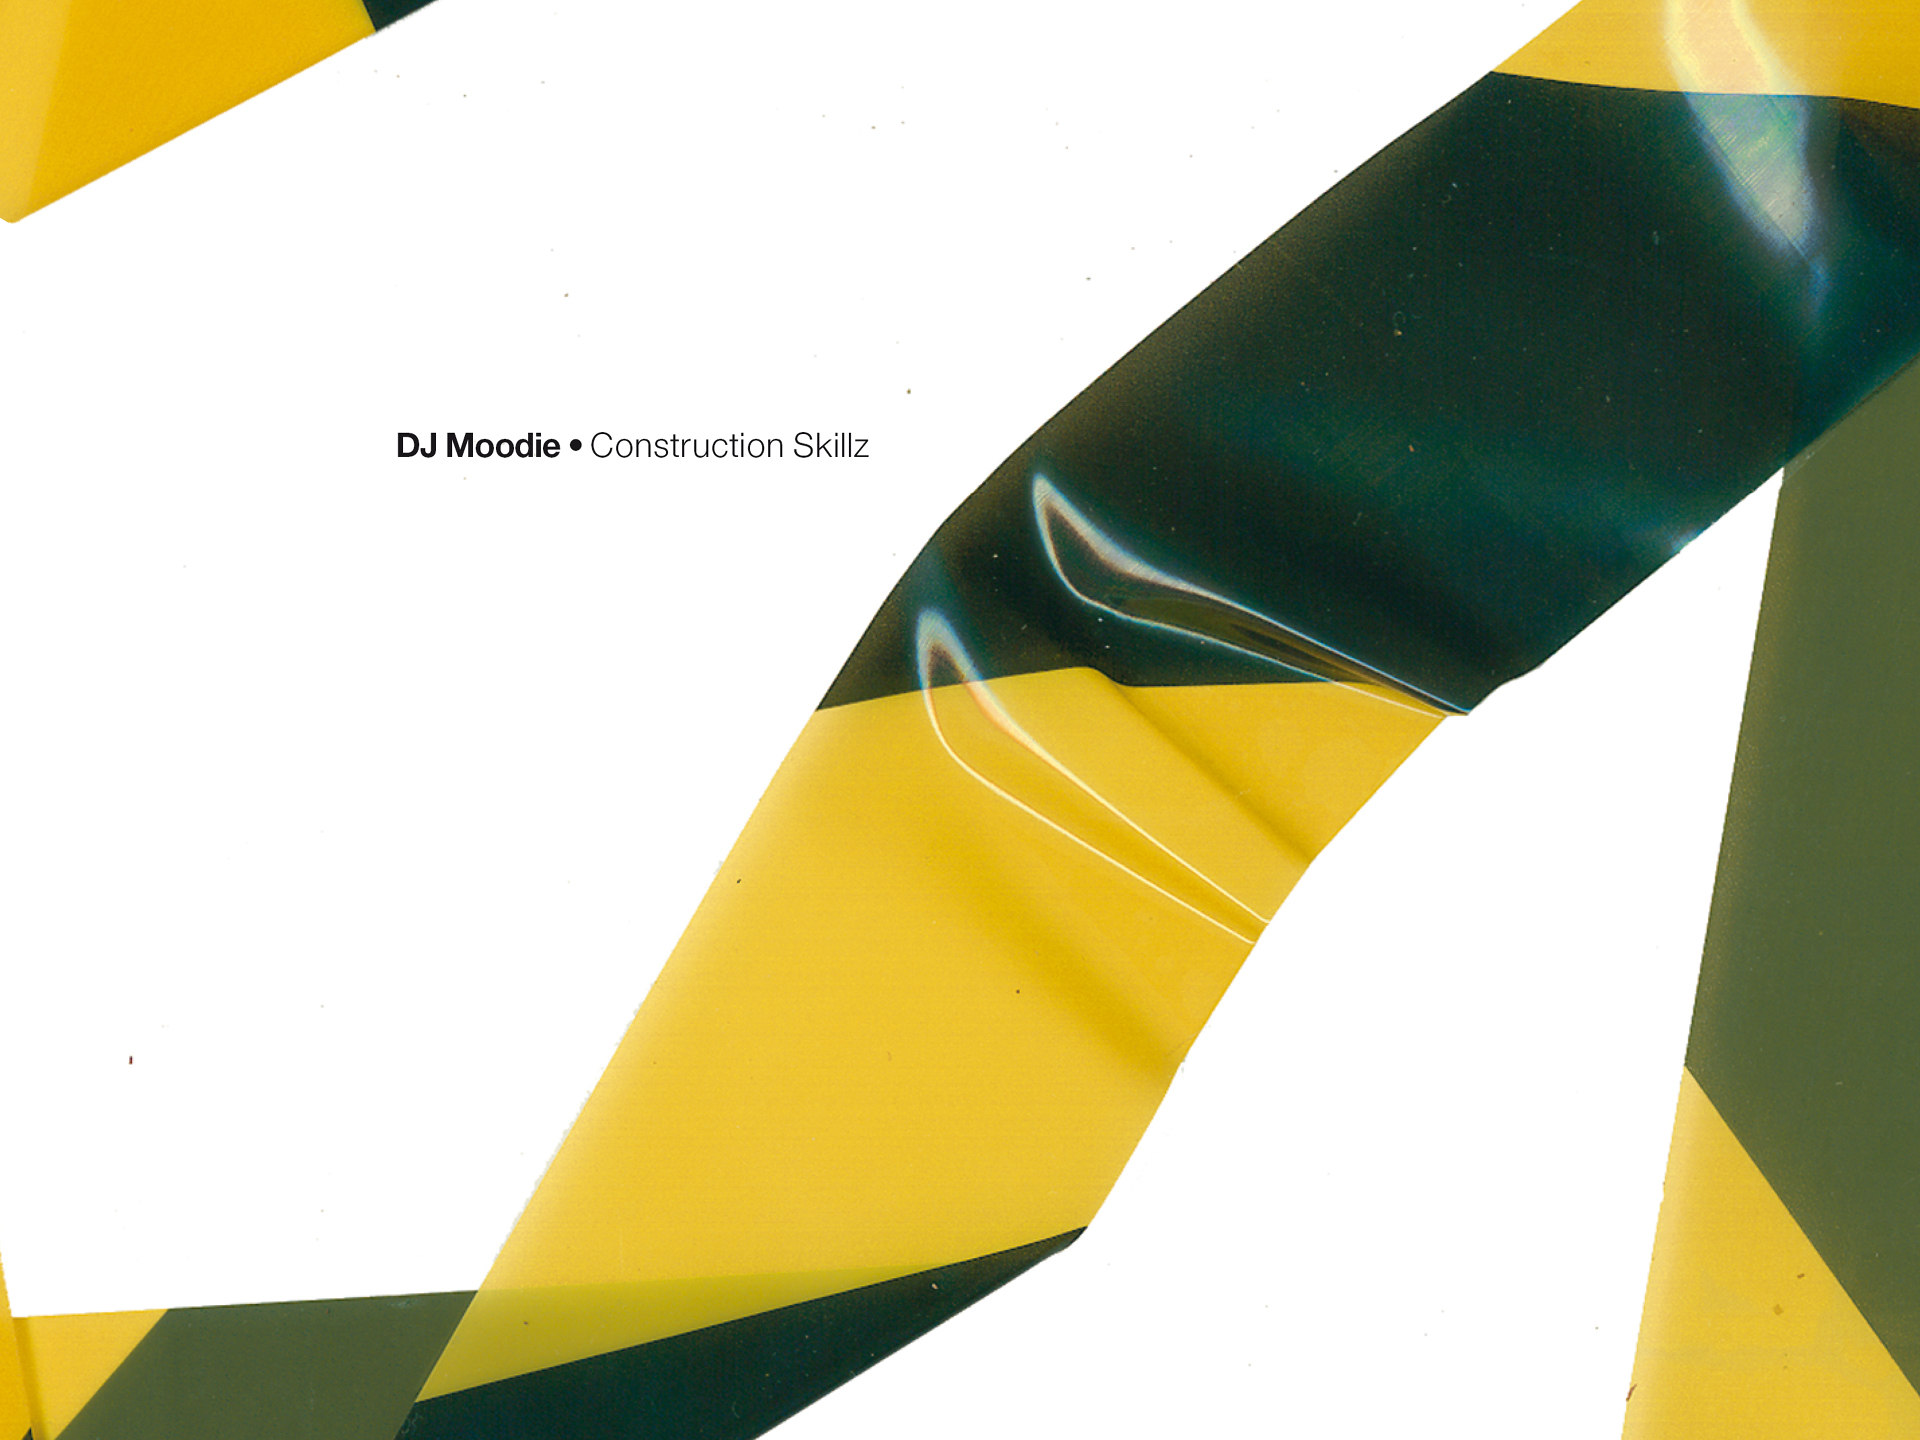 Design and art direction for DJ Moodies' Construction Skillz album.